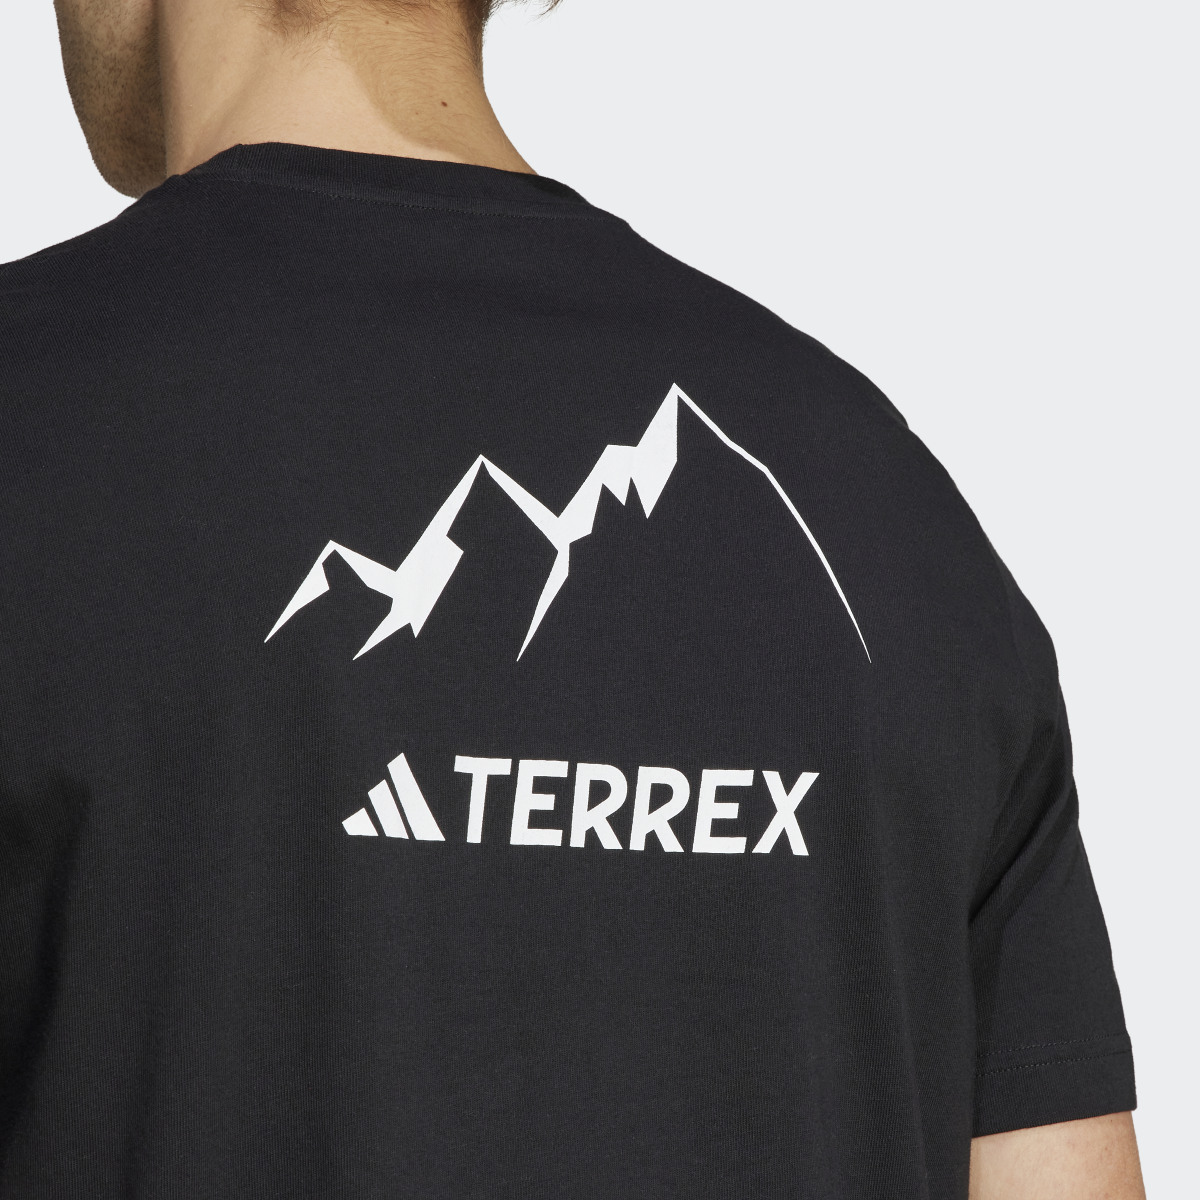 Adidas T-shirt MTN 2.0 TERREX. 7